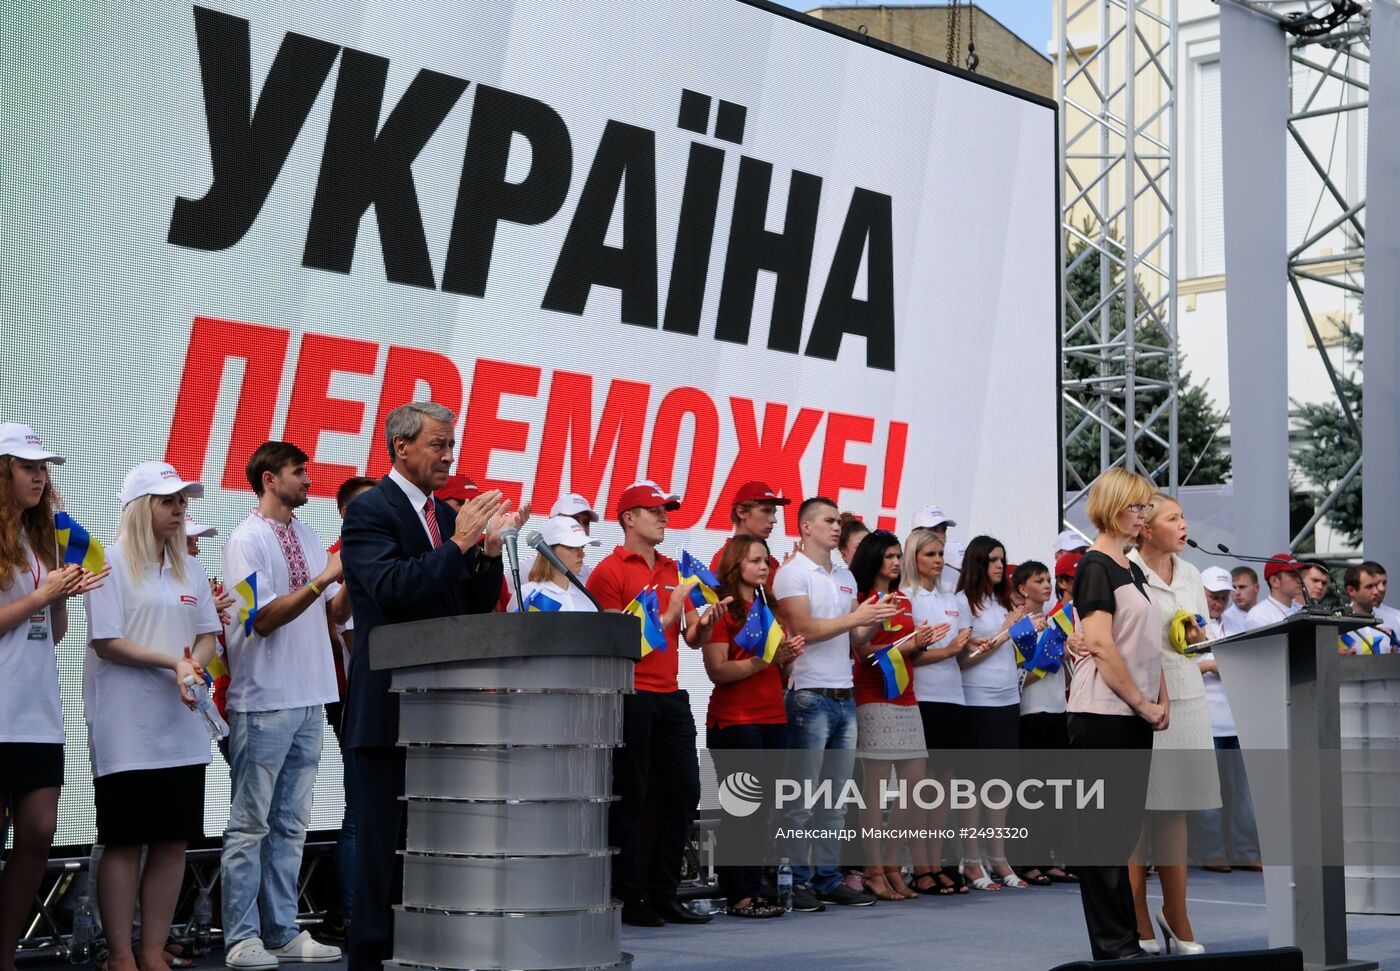 Cъезд партии "Батькивщина" в Киеве